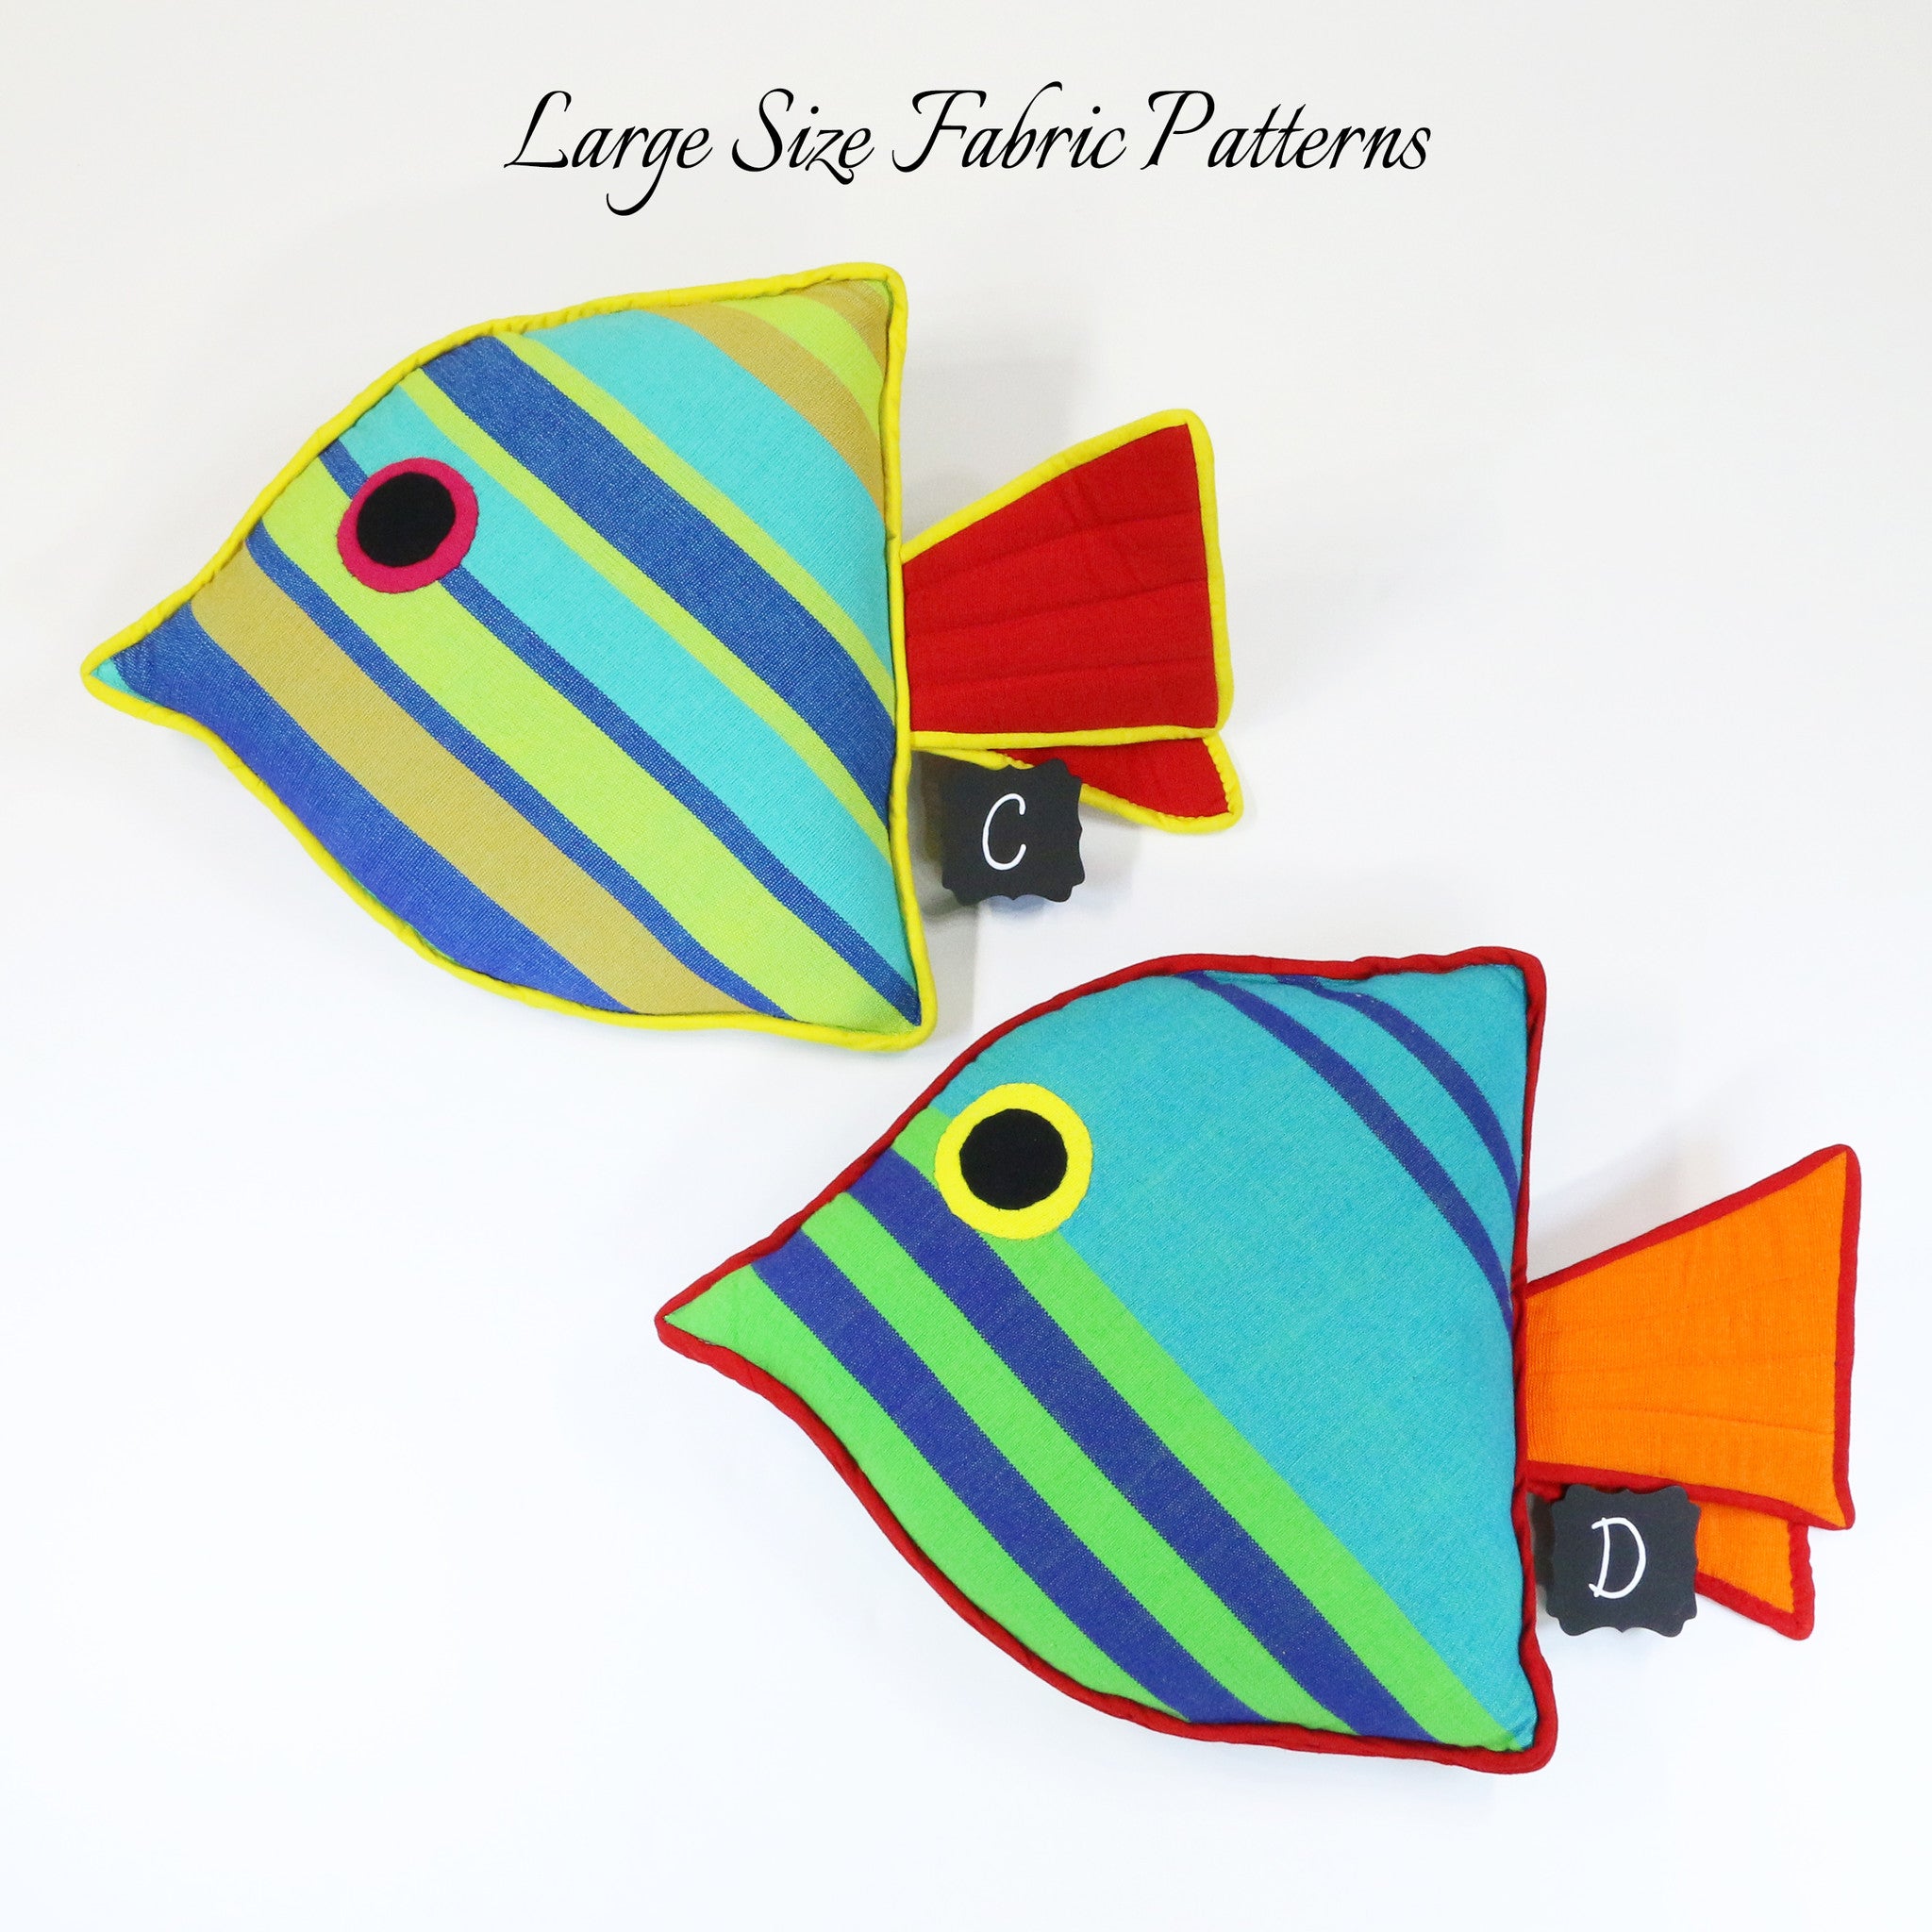 Morgan, the Juvenile Fish – large size fabric patterns shown